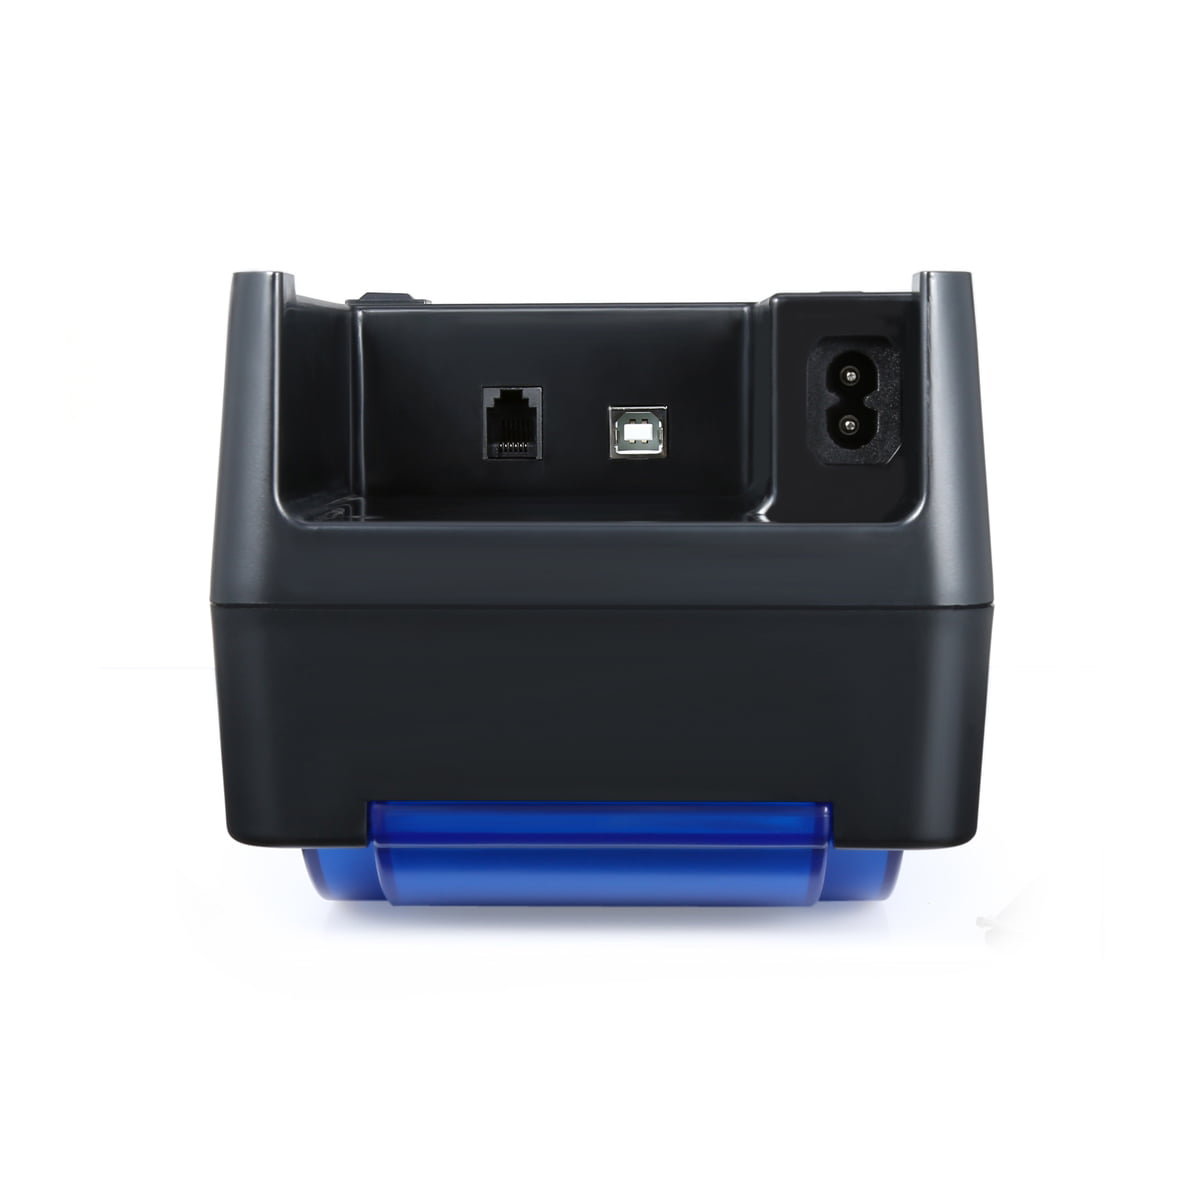 Excelvan Bondrucker Thermodrucker Kassendrucker USB 58mm Thermal Dot Printer neu 